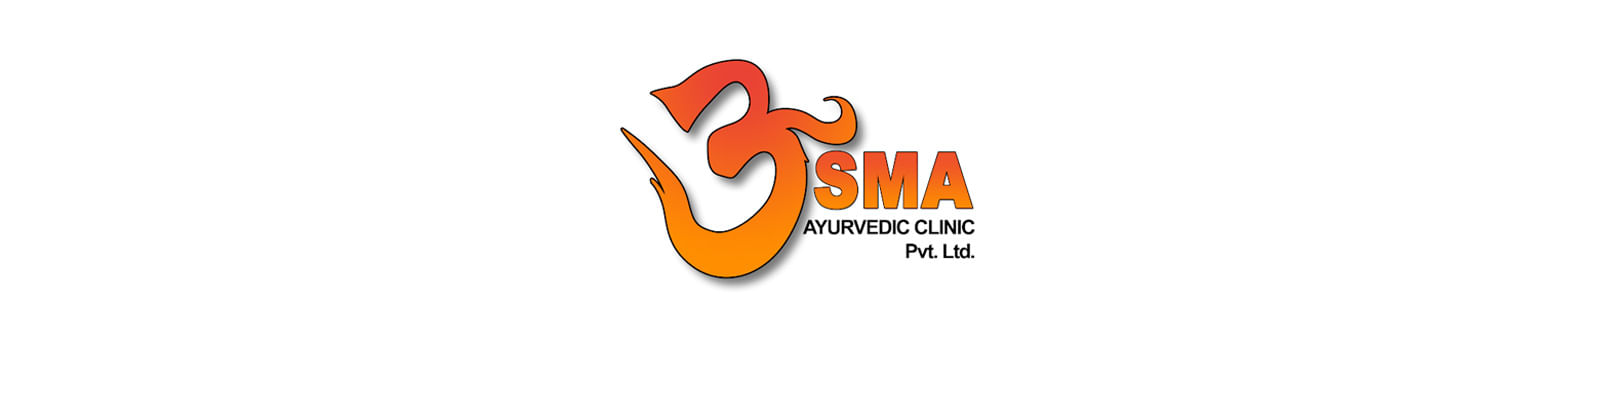 Usma Ayurvedic Clinic